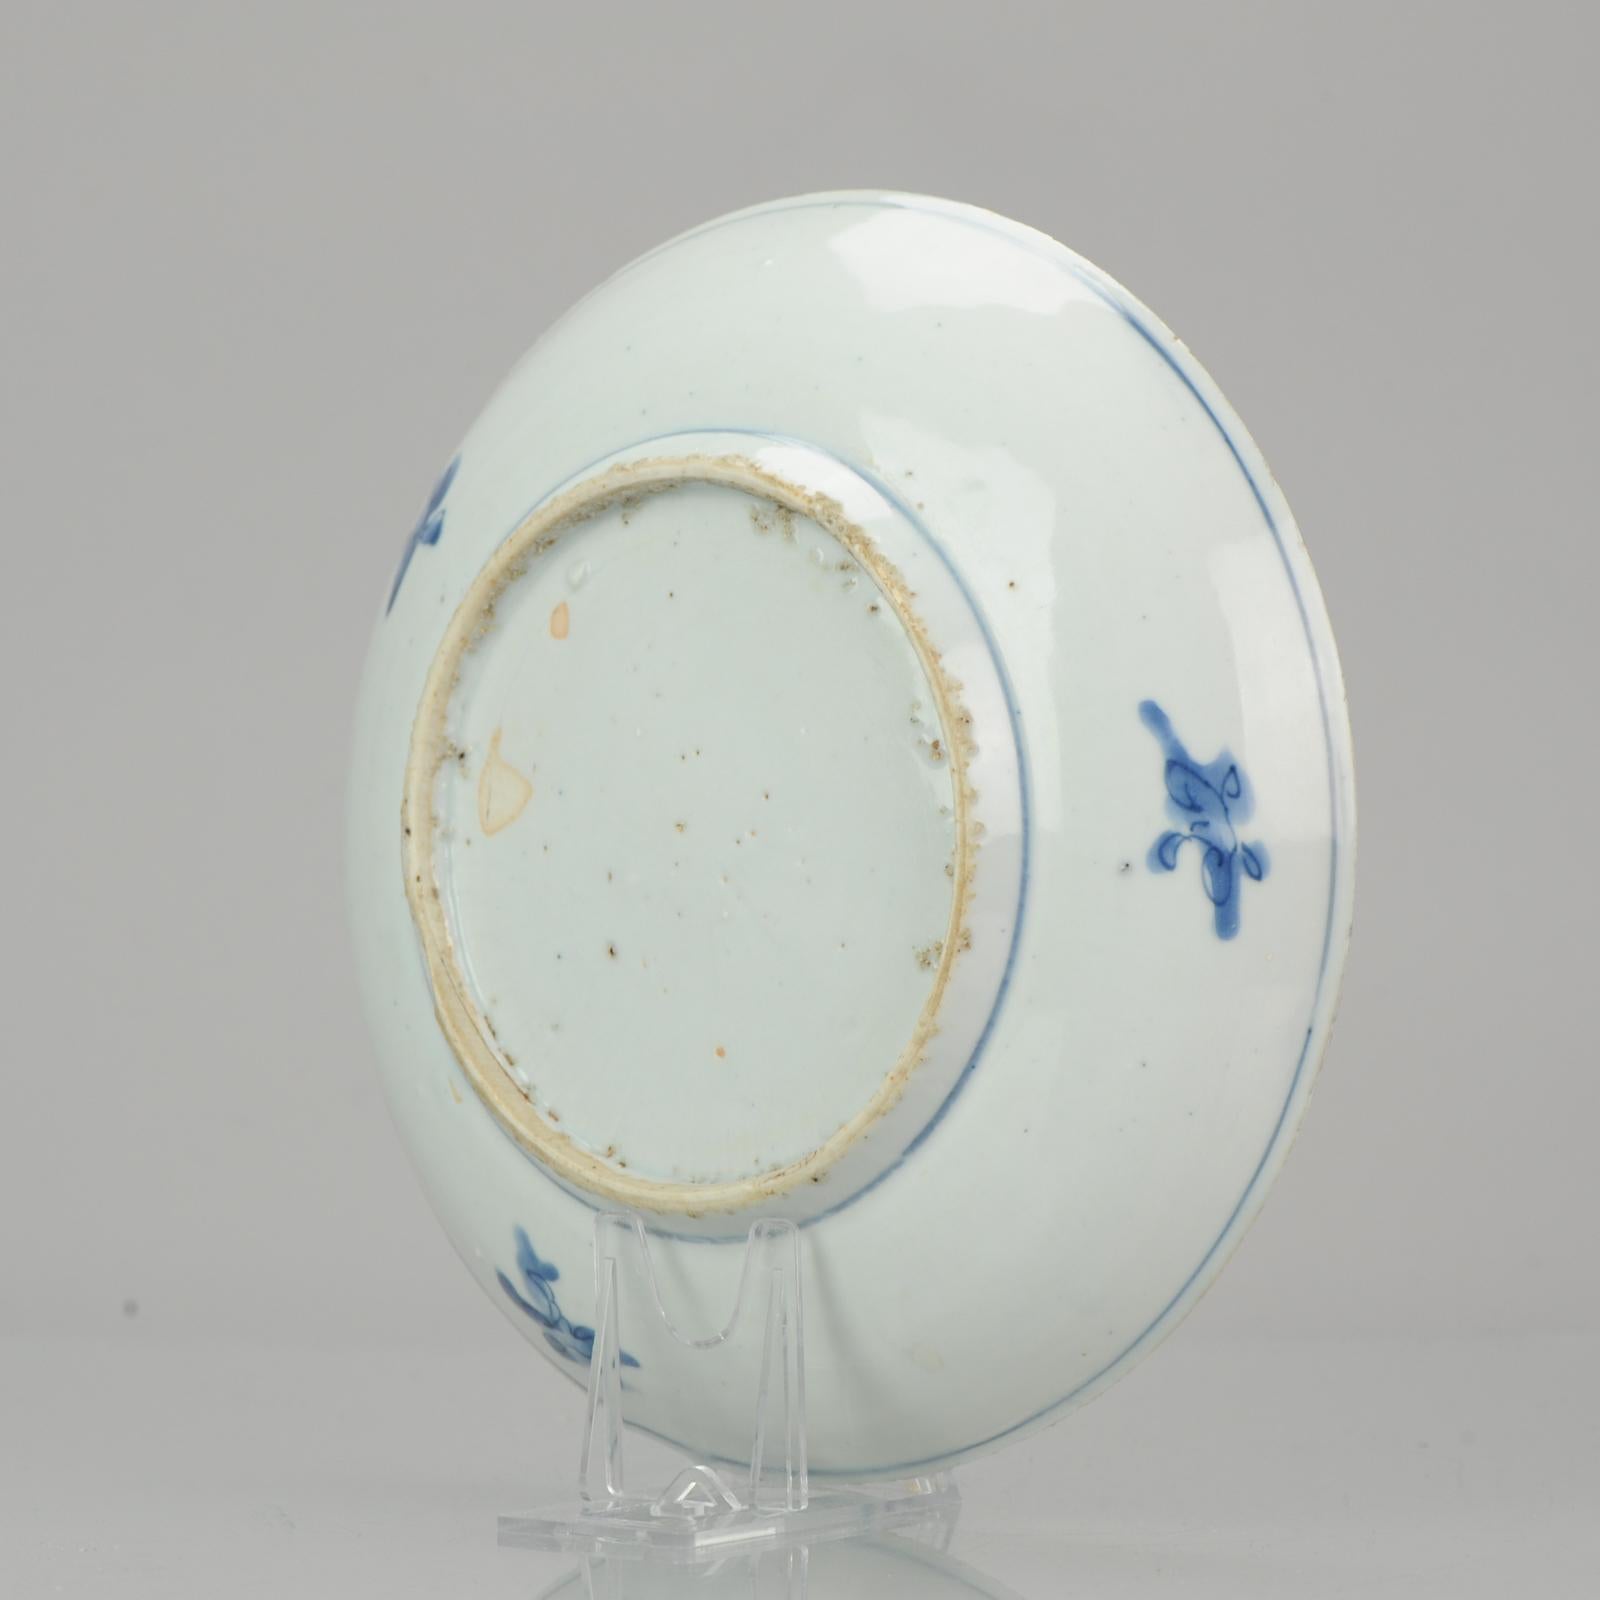 Antique Chinese Porcelain Lotus Ming 1600-1640 Tianqi Chongzhen Anhua Engraving For Sale 5